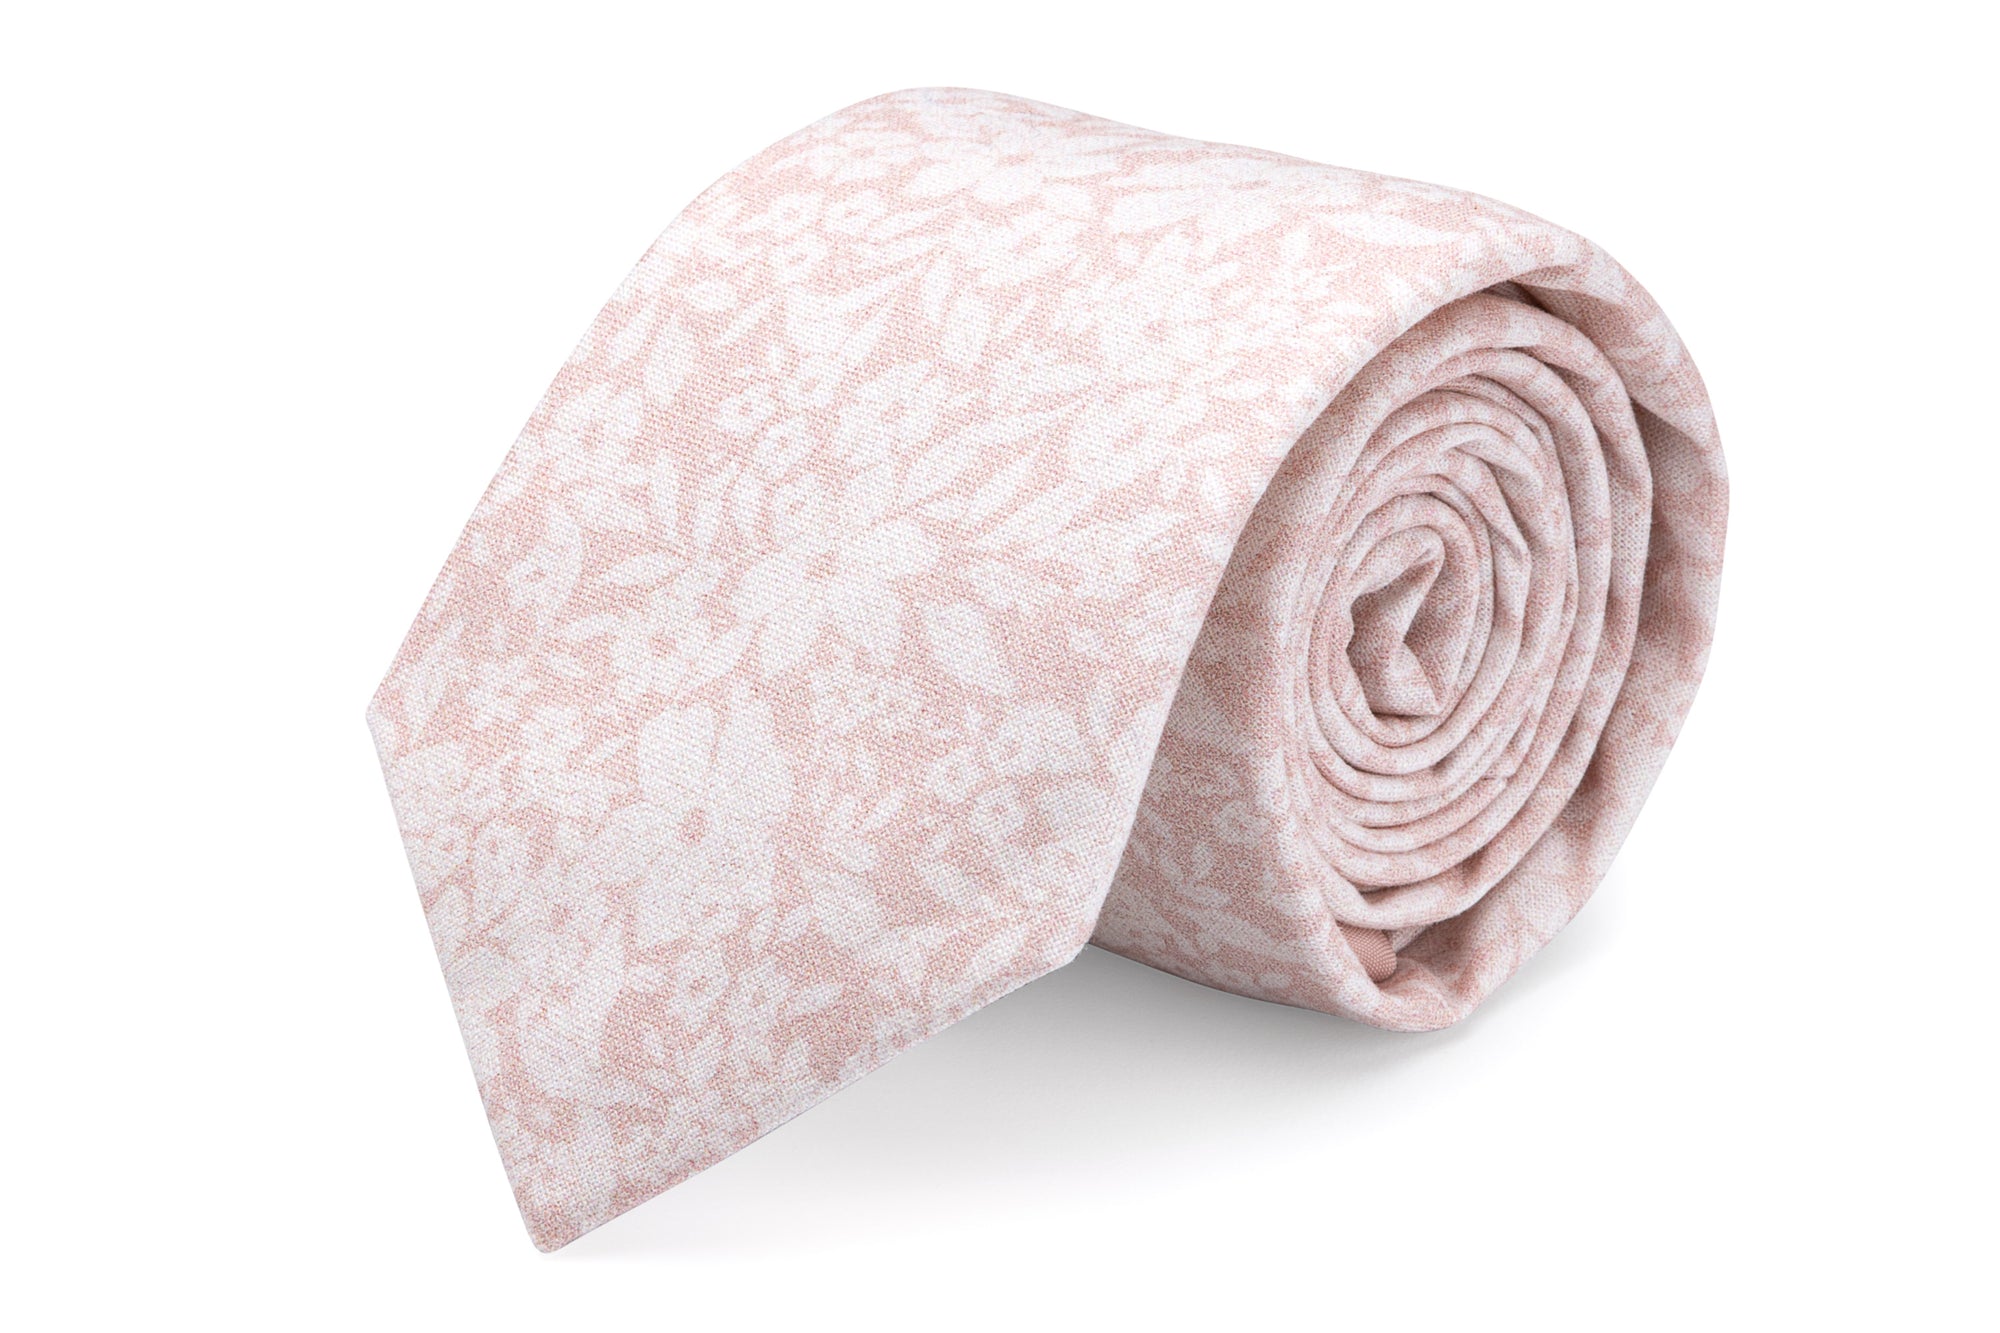 blush floral tie